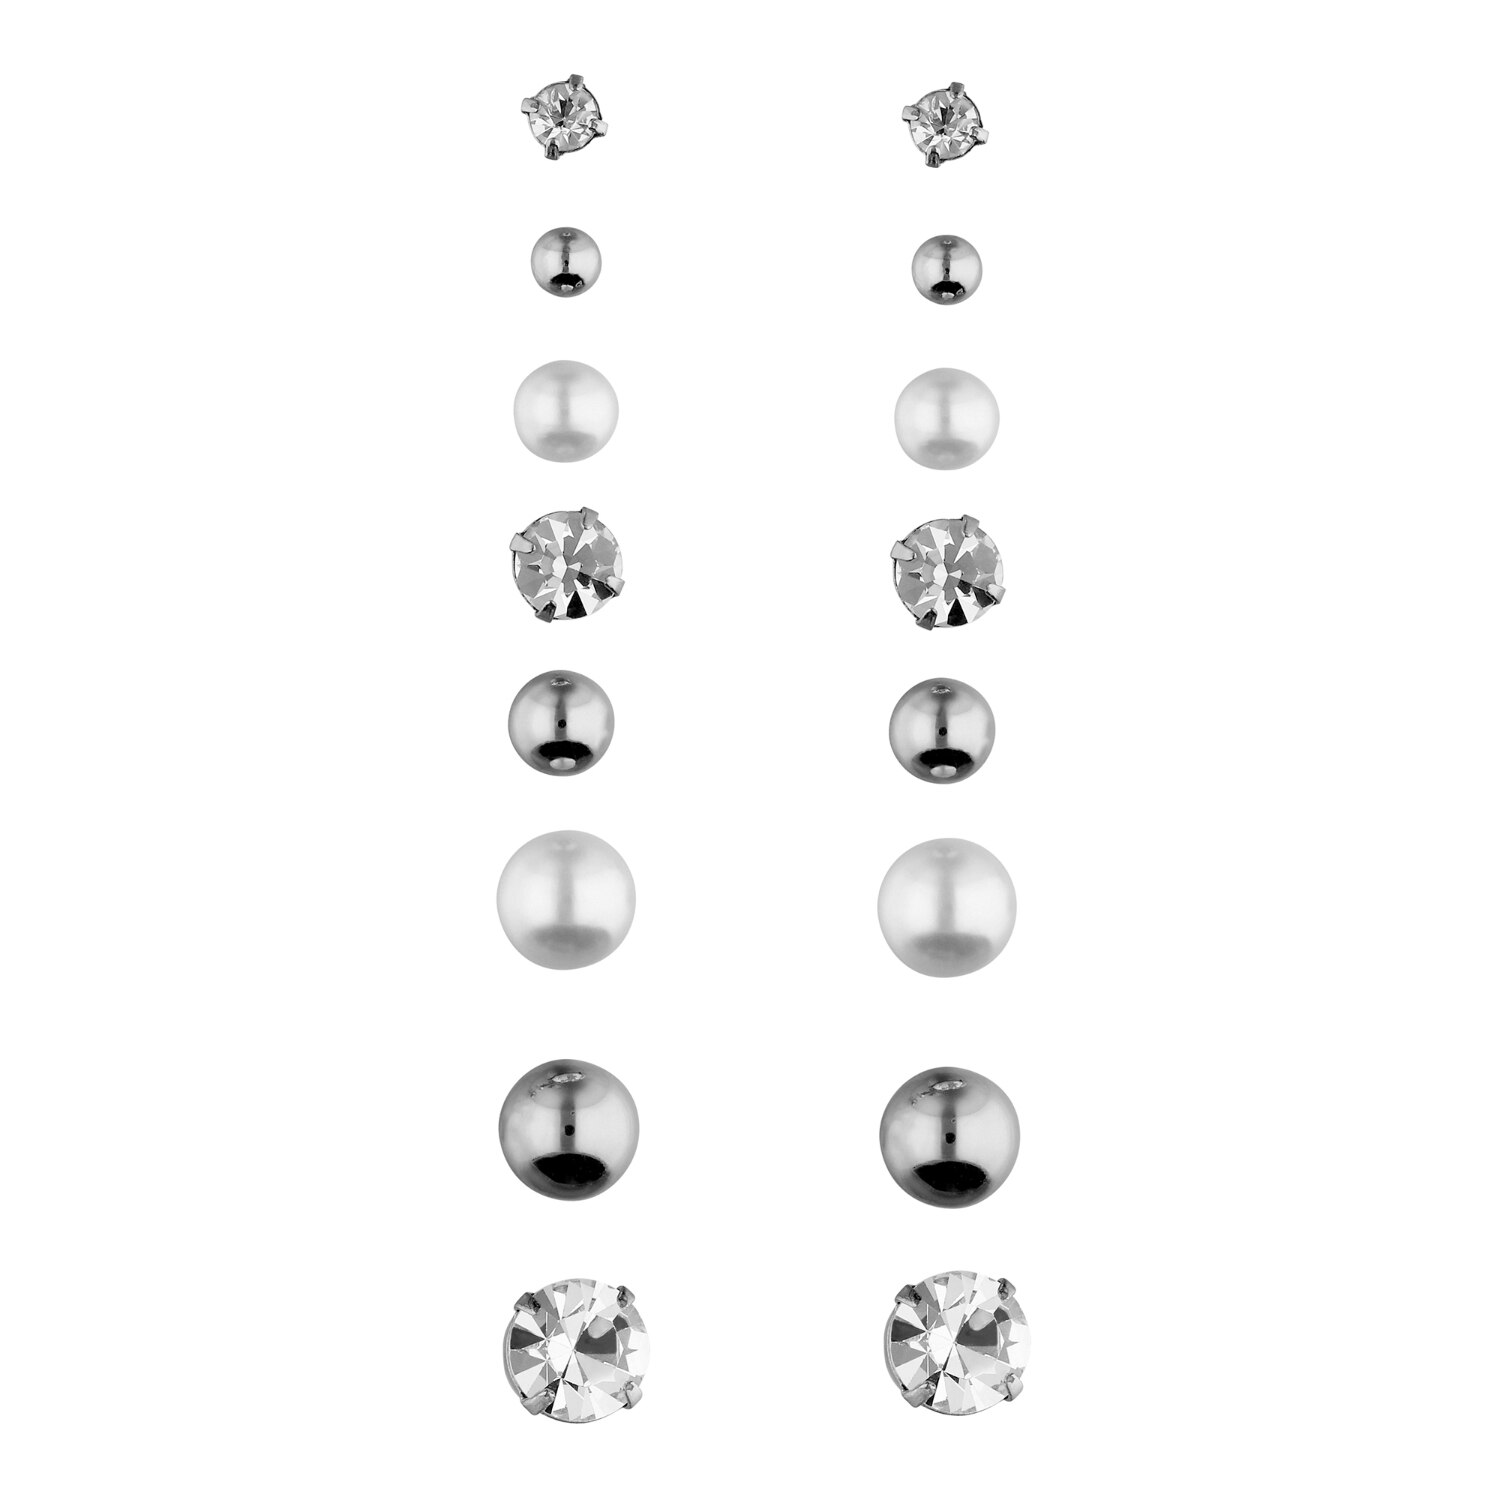 I AM Jewelry Earring-Set, Silver, 16CT , CVS